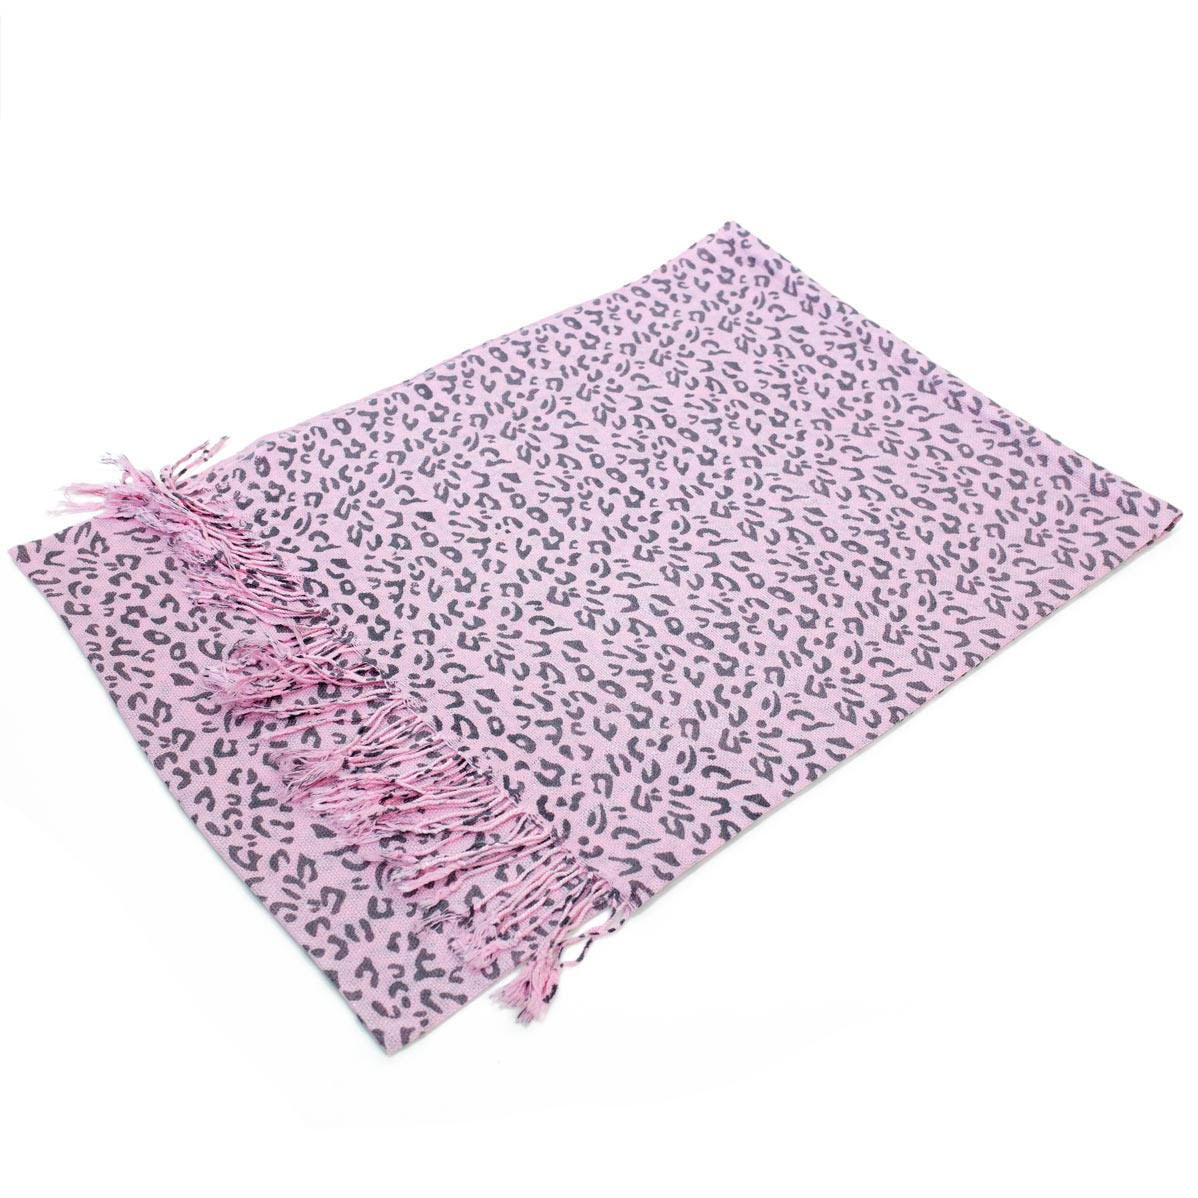 W057-6  Leopard Print Pashmina Shawl Grey/Pink